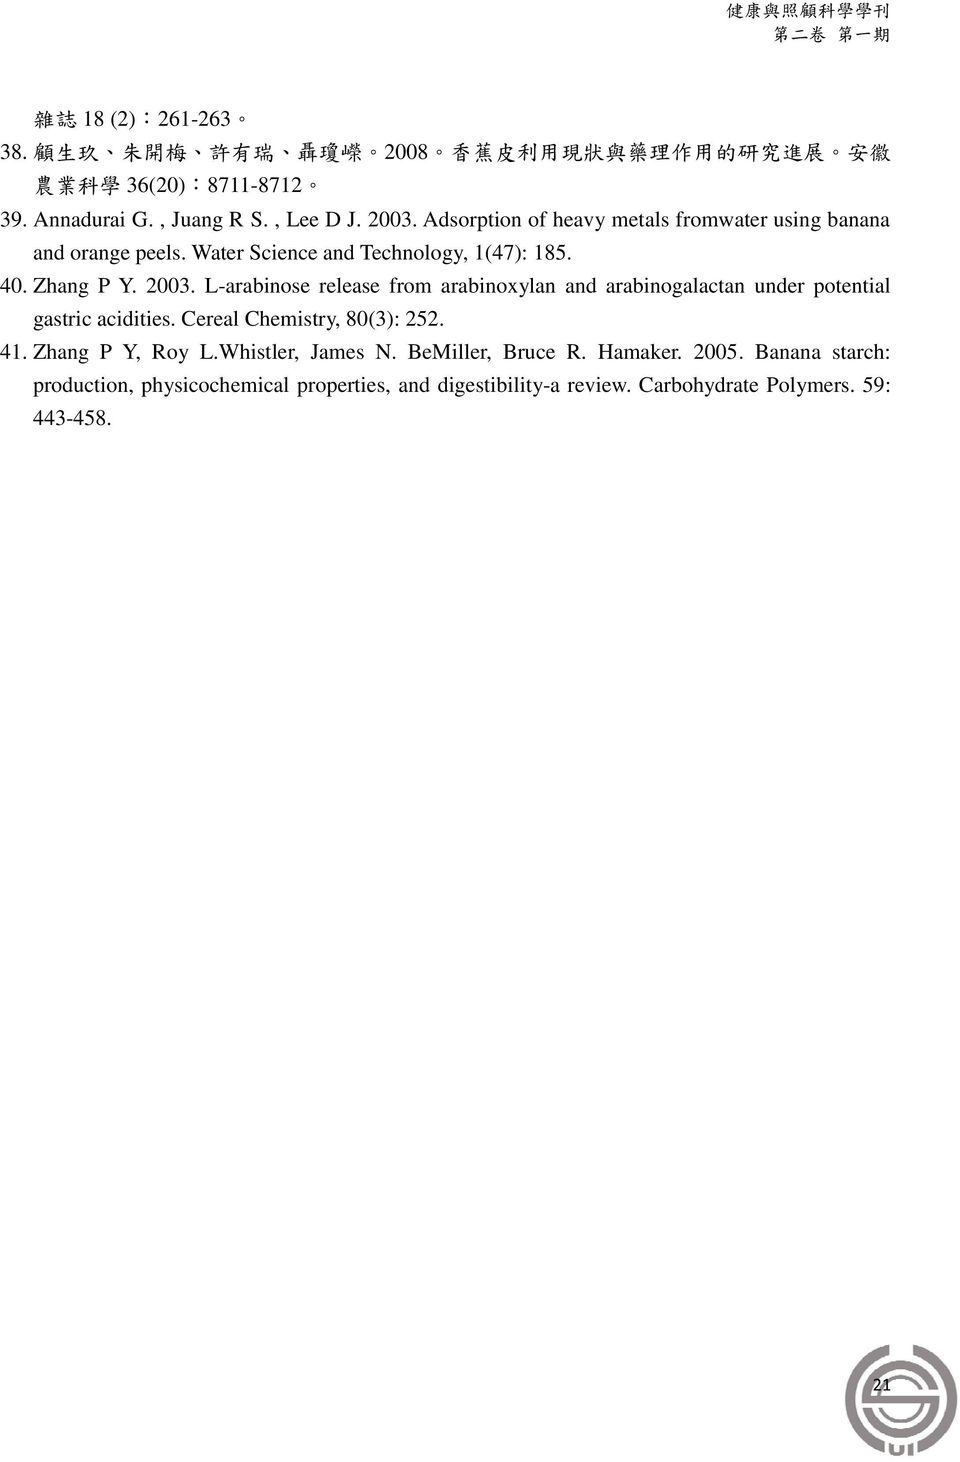 Zhang P Y. 2003. L-arabinose release from arabinoxylan and arabinogalactan under potential gastric acidities. Cereal Chemistry, 80(3): 252. 41.